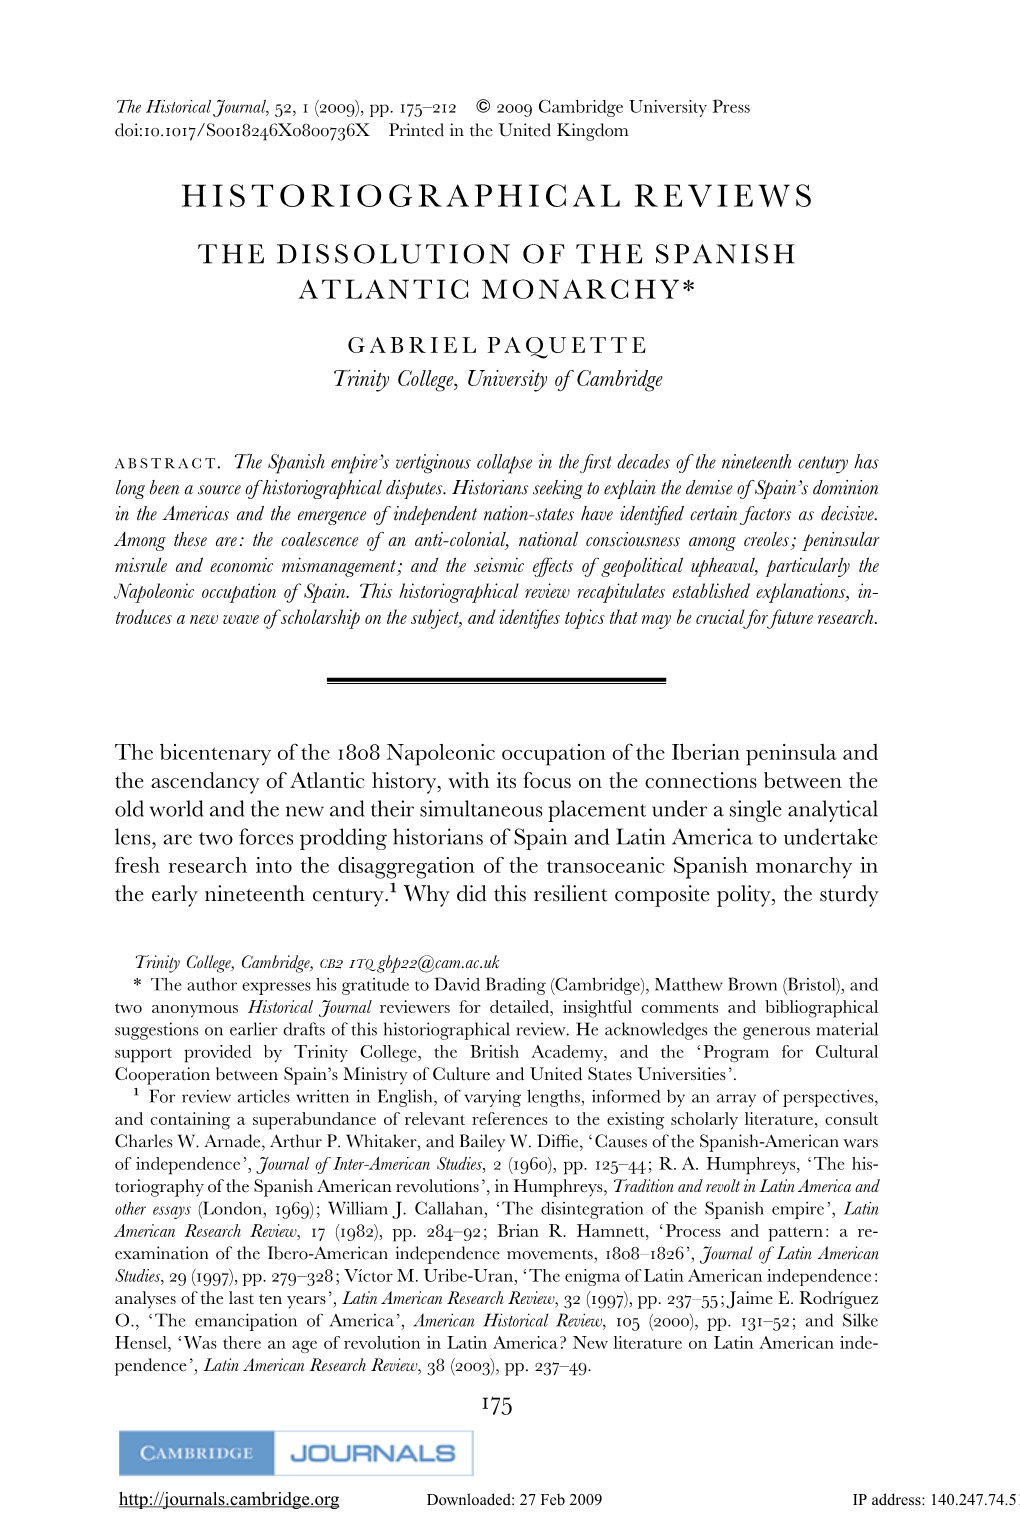 The Dissolution of the Spanish Atlantic Monarchy*